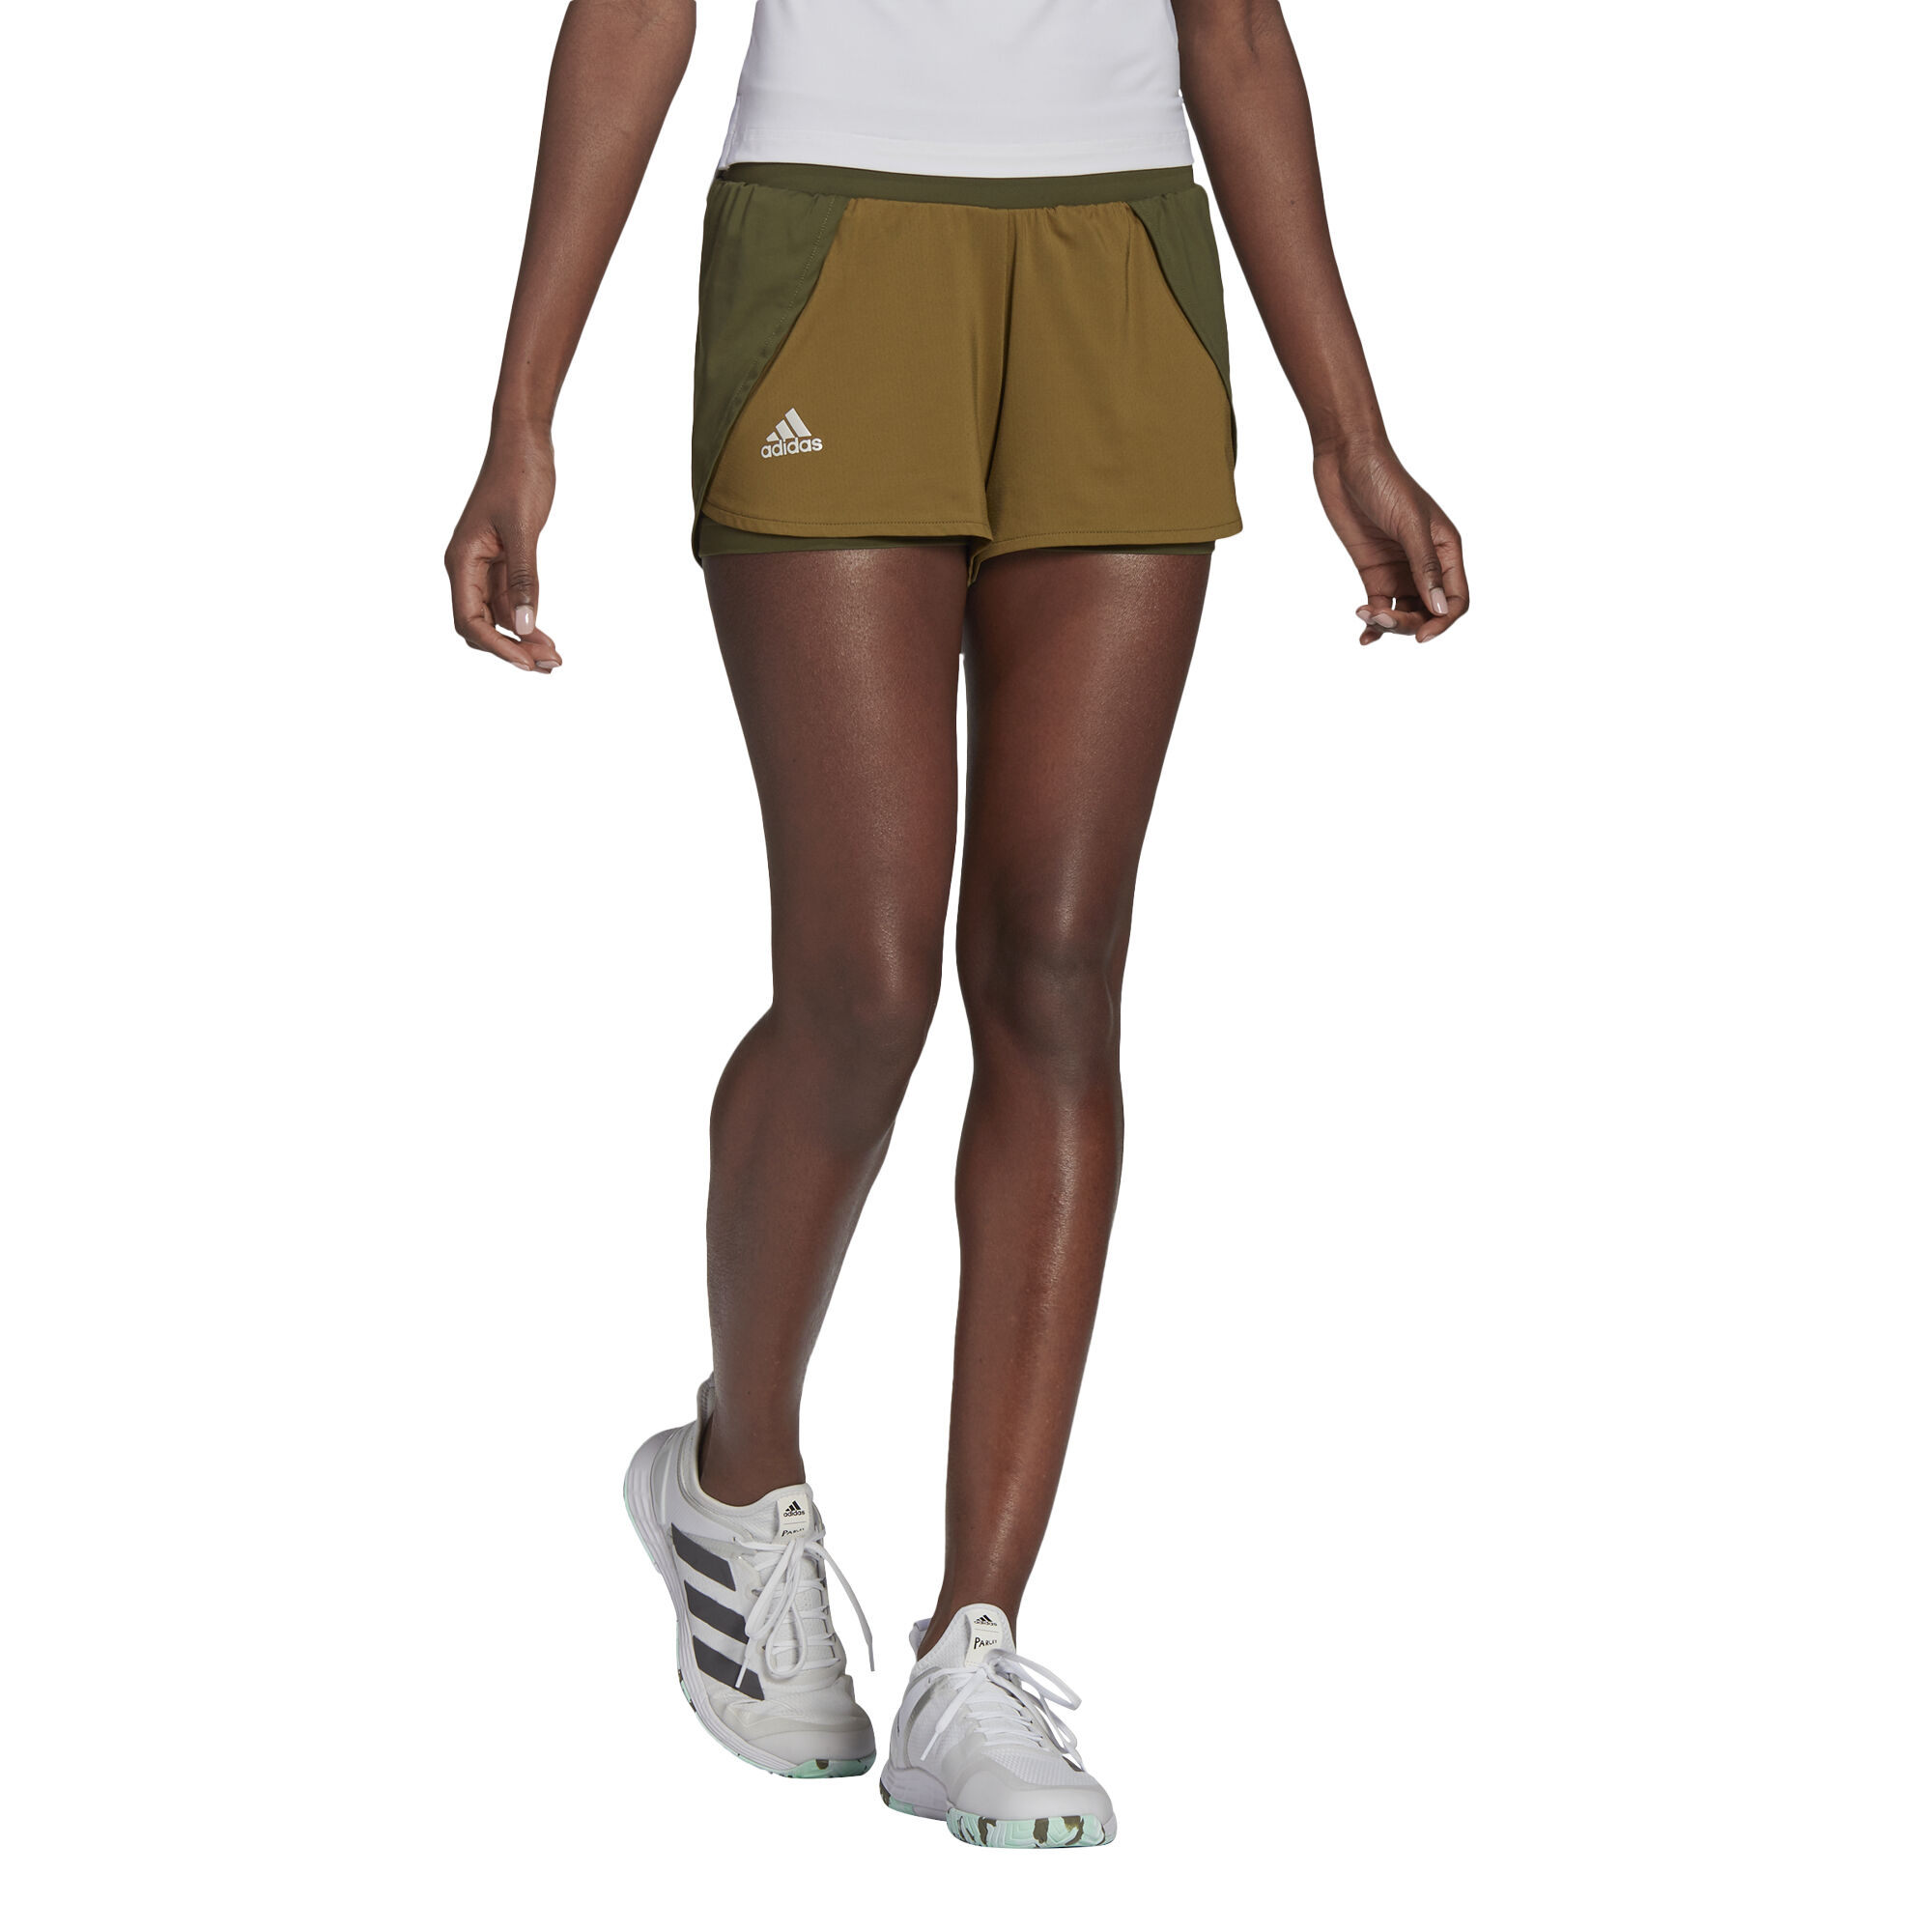 Aburrido Suburbio Asistente adidas Match Shorts Mujeres - Oliva, Marrón compra online | Tennis-Point